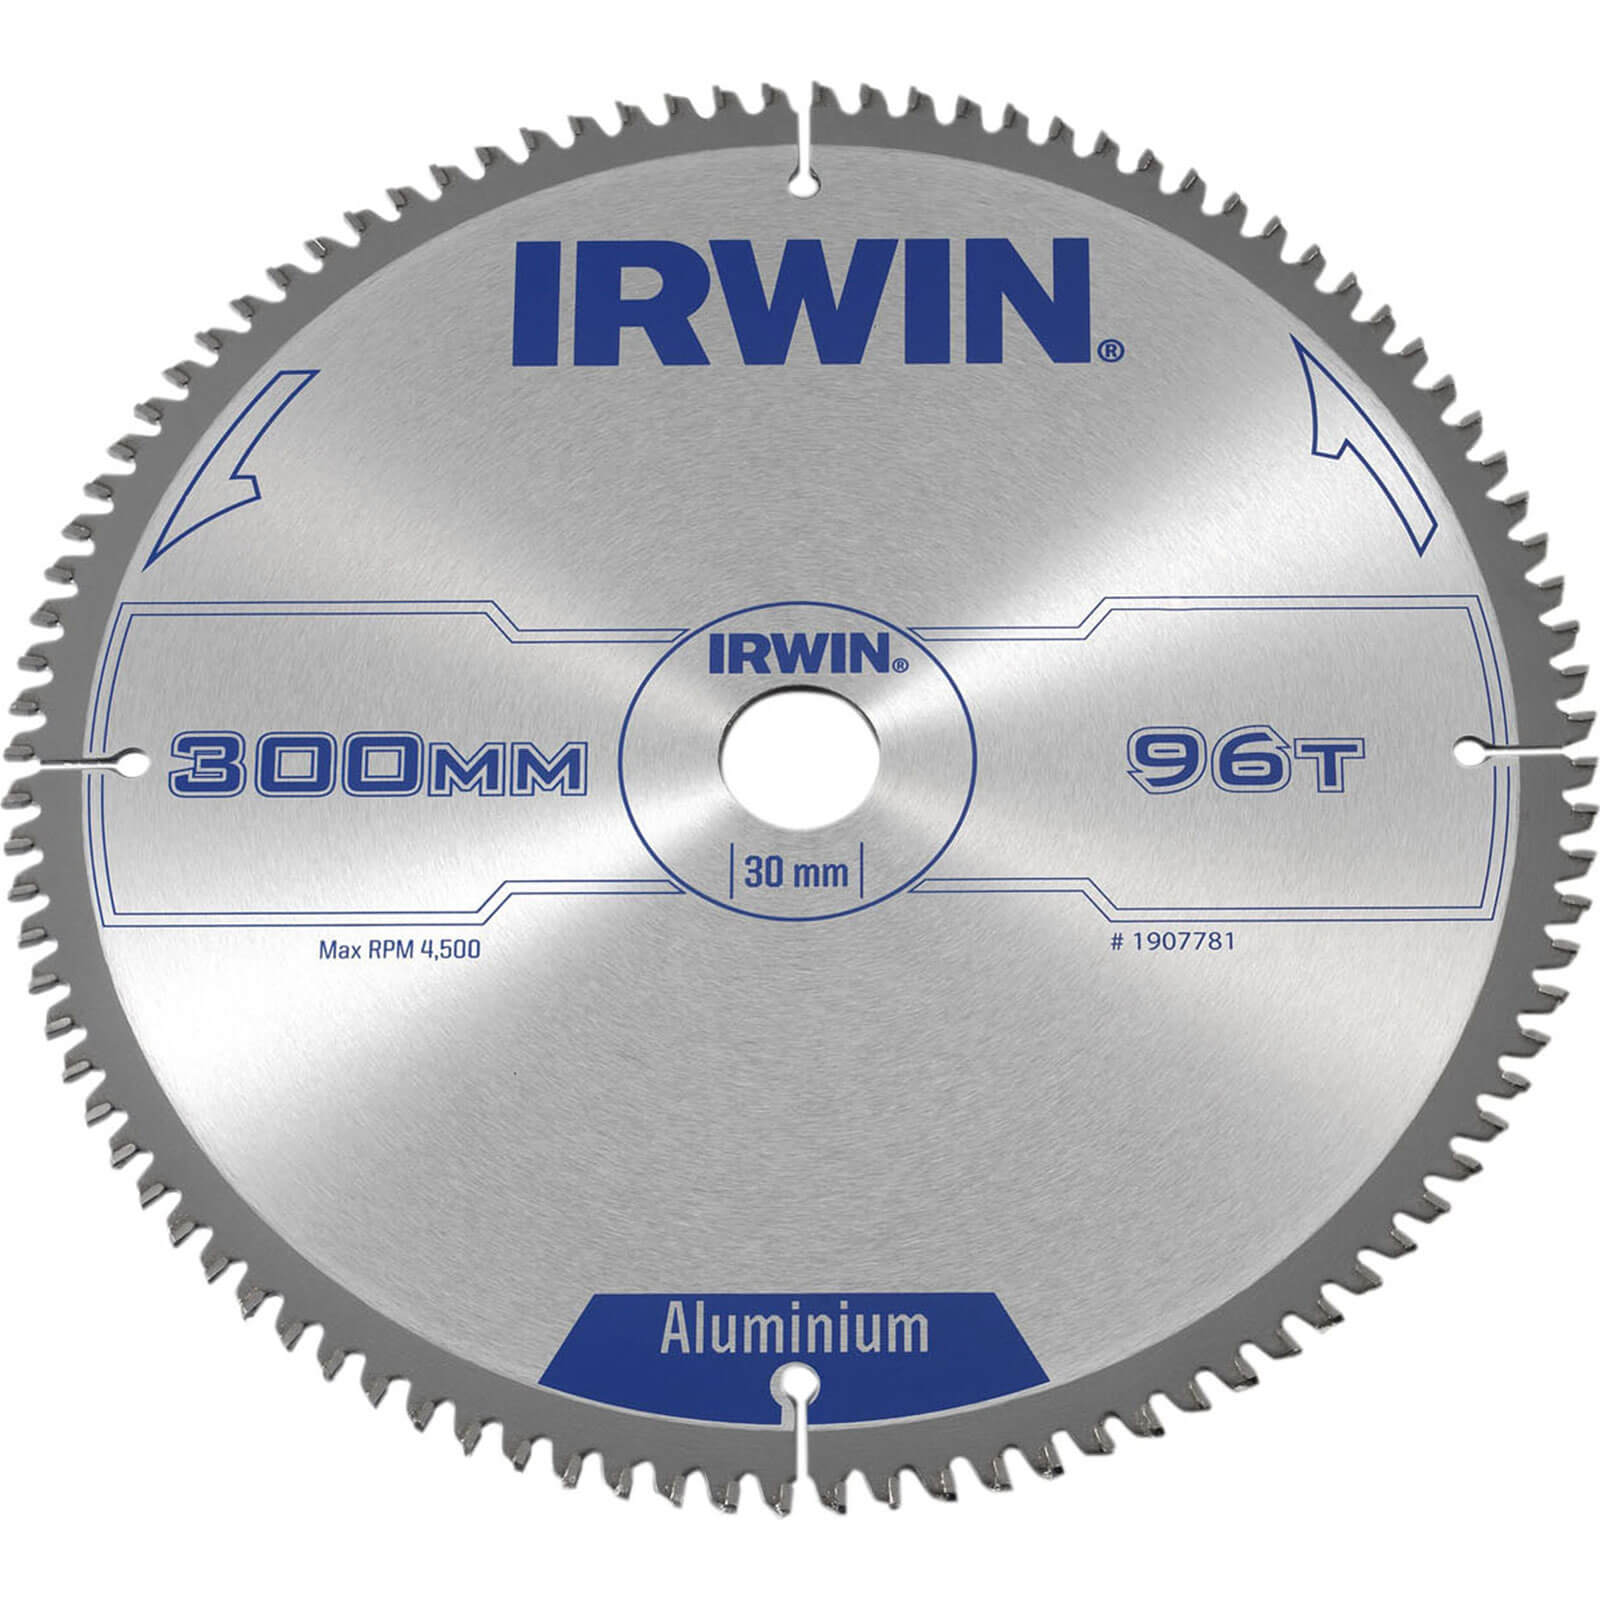 Image of Irwin Aluminium Non-Ferrous Metal Saw Blade 300mm 96T 30mm